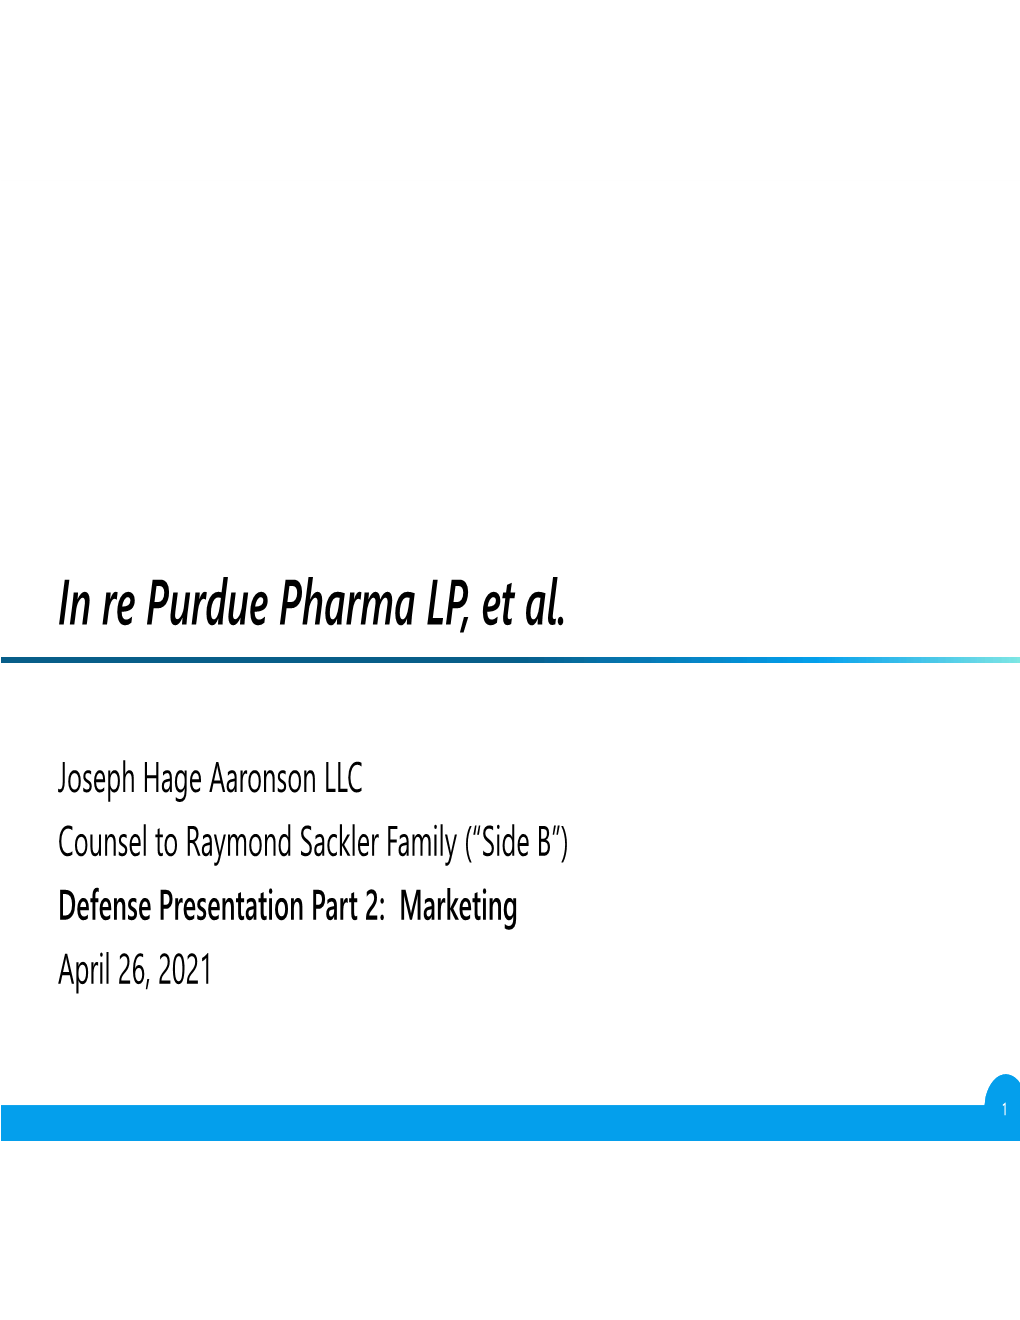 In Re Purdue Pharma LP, Et Al